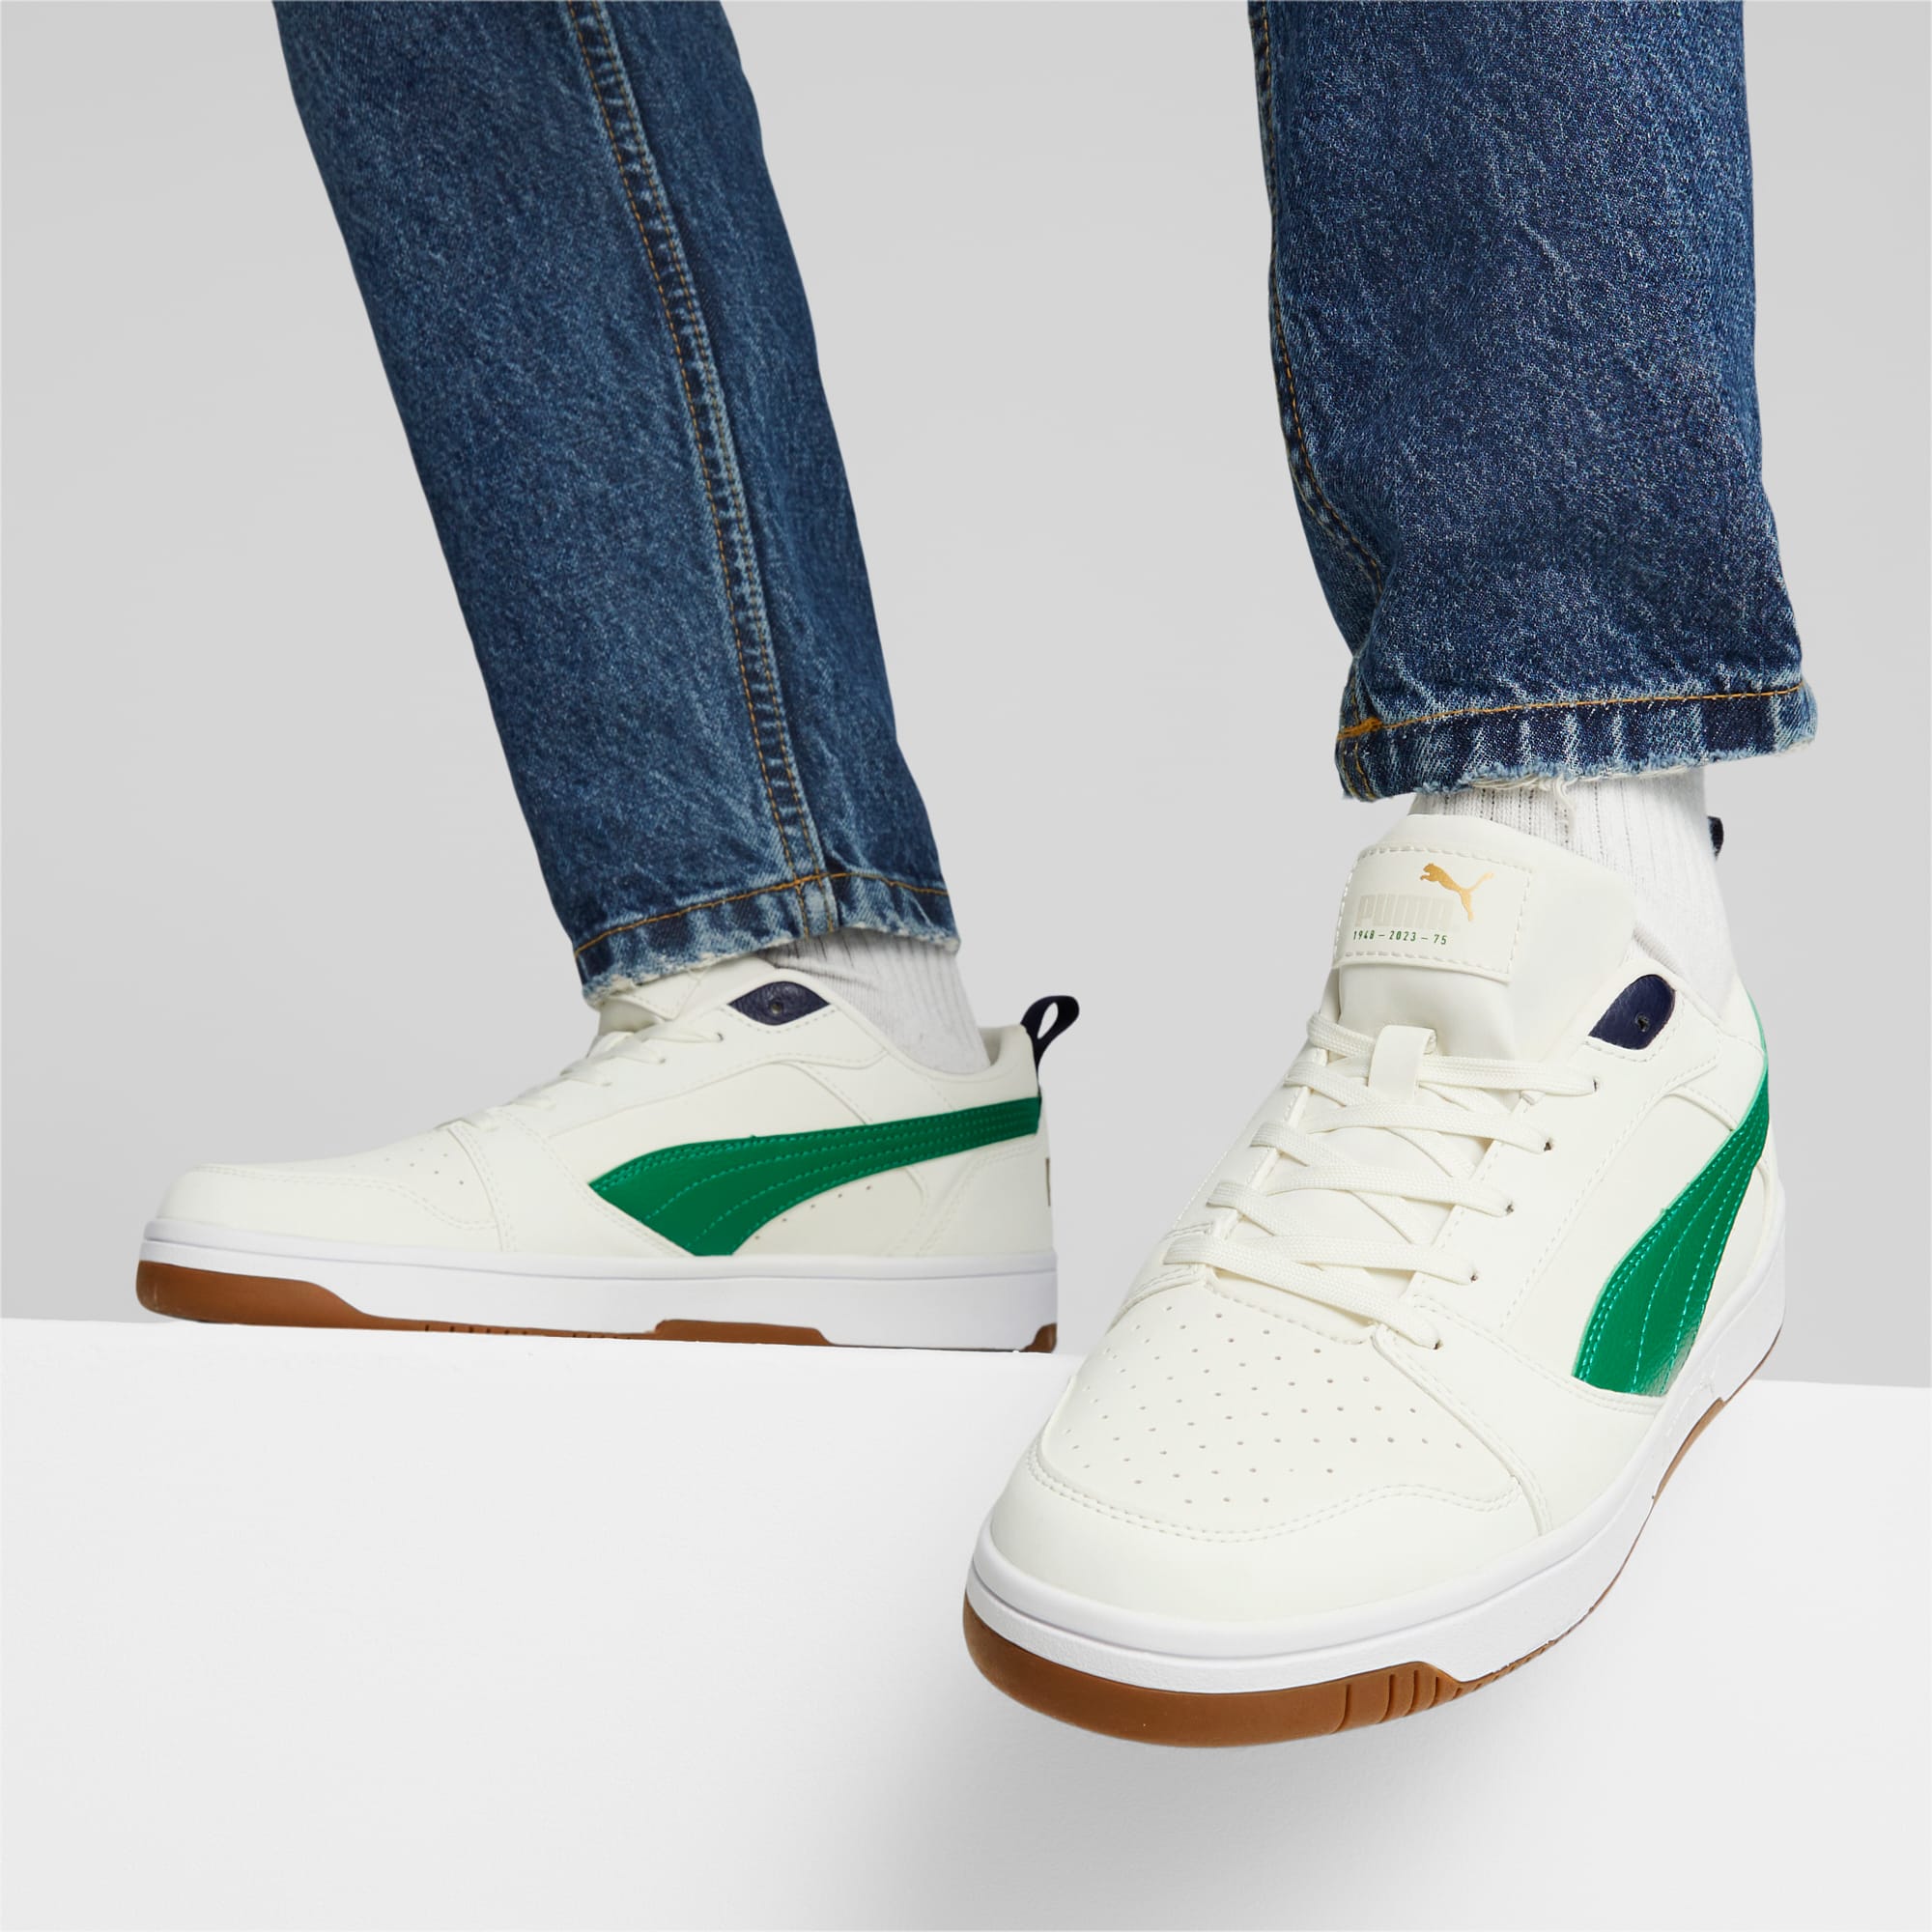 PUMA Chaussure Sneakers Basses Du 75e Anniversaire Rebound, Blanc/Bleu/Vert